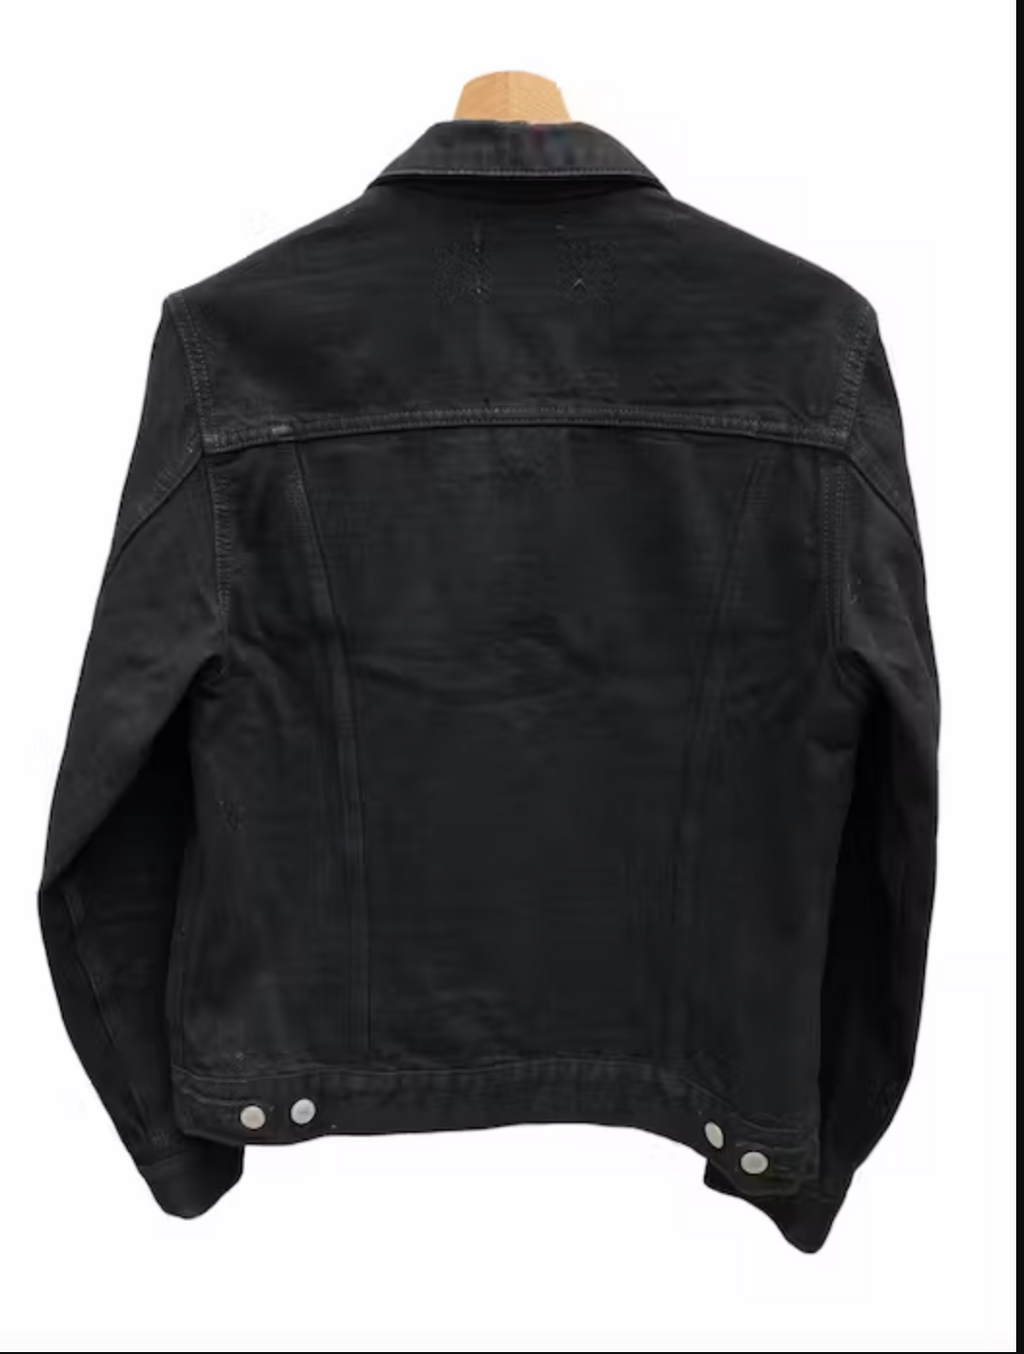 Black Denim Jacket Size S Small